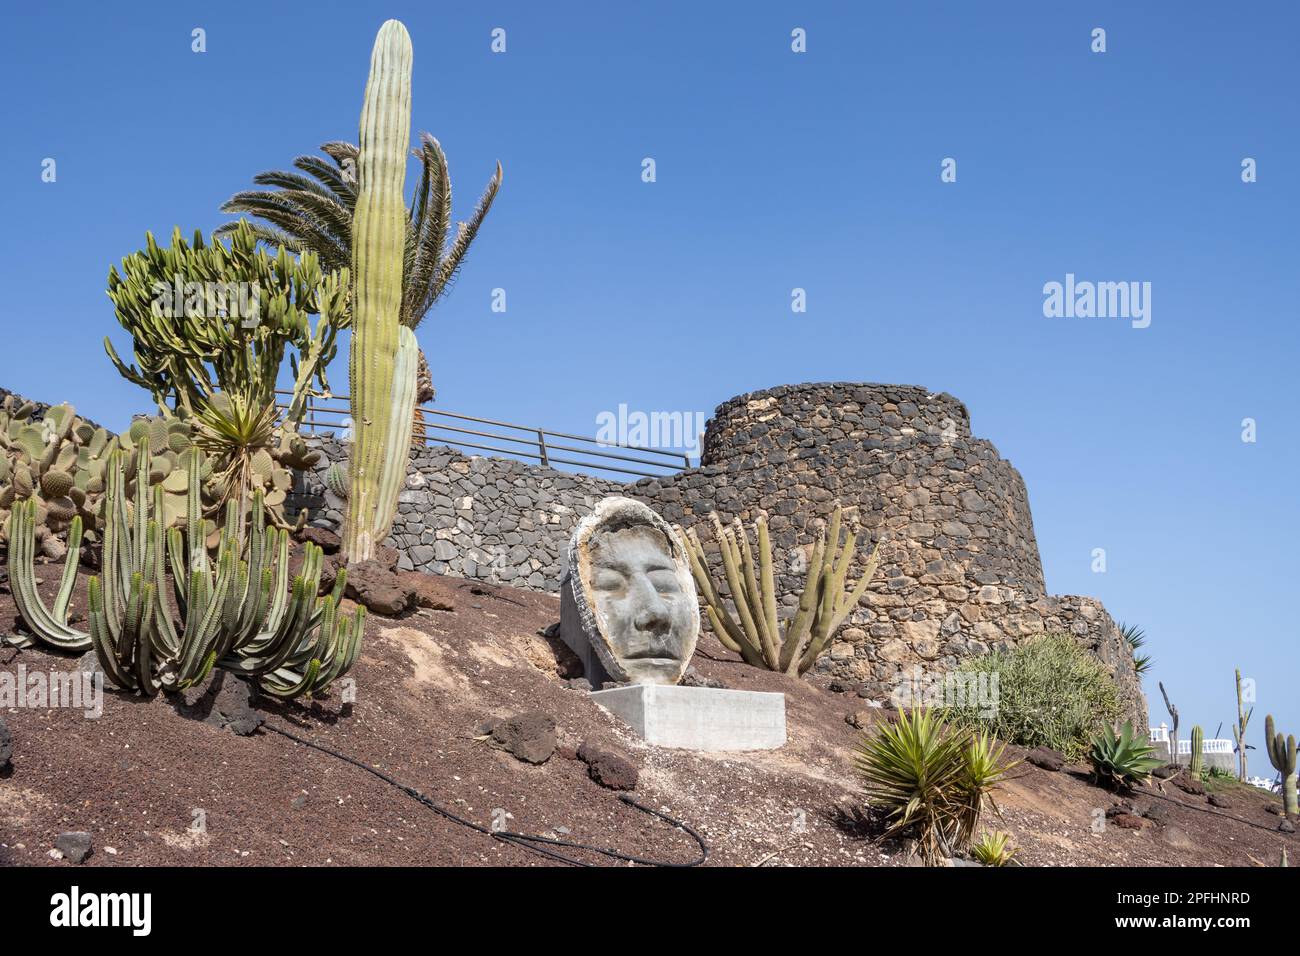 Various kinds of cactuses, growing in a park at Fabrica de Callao de los Pozos. Statue of a face. Coast of the Atlantic ocean. Bright blue sky. Puerto Stock Photo